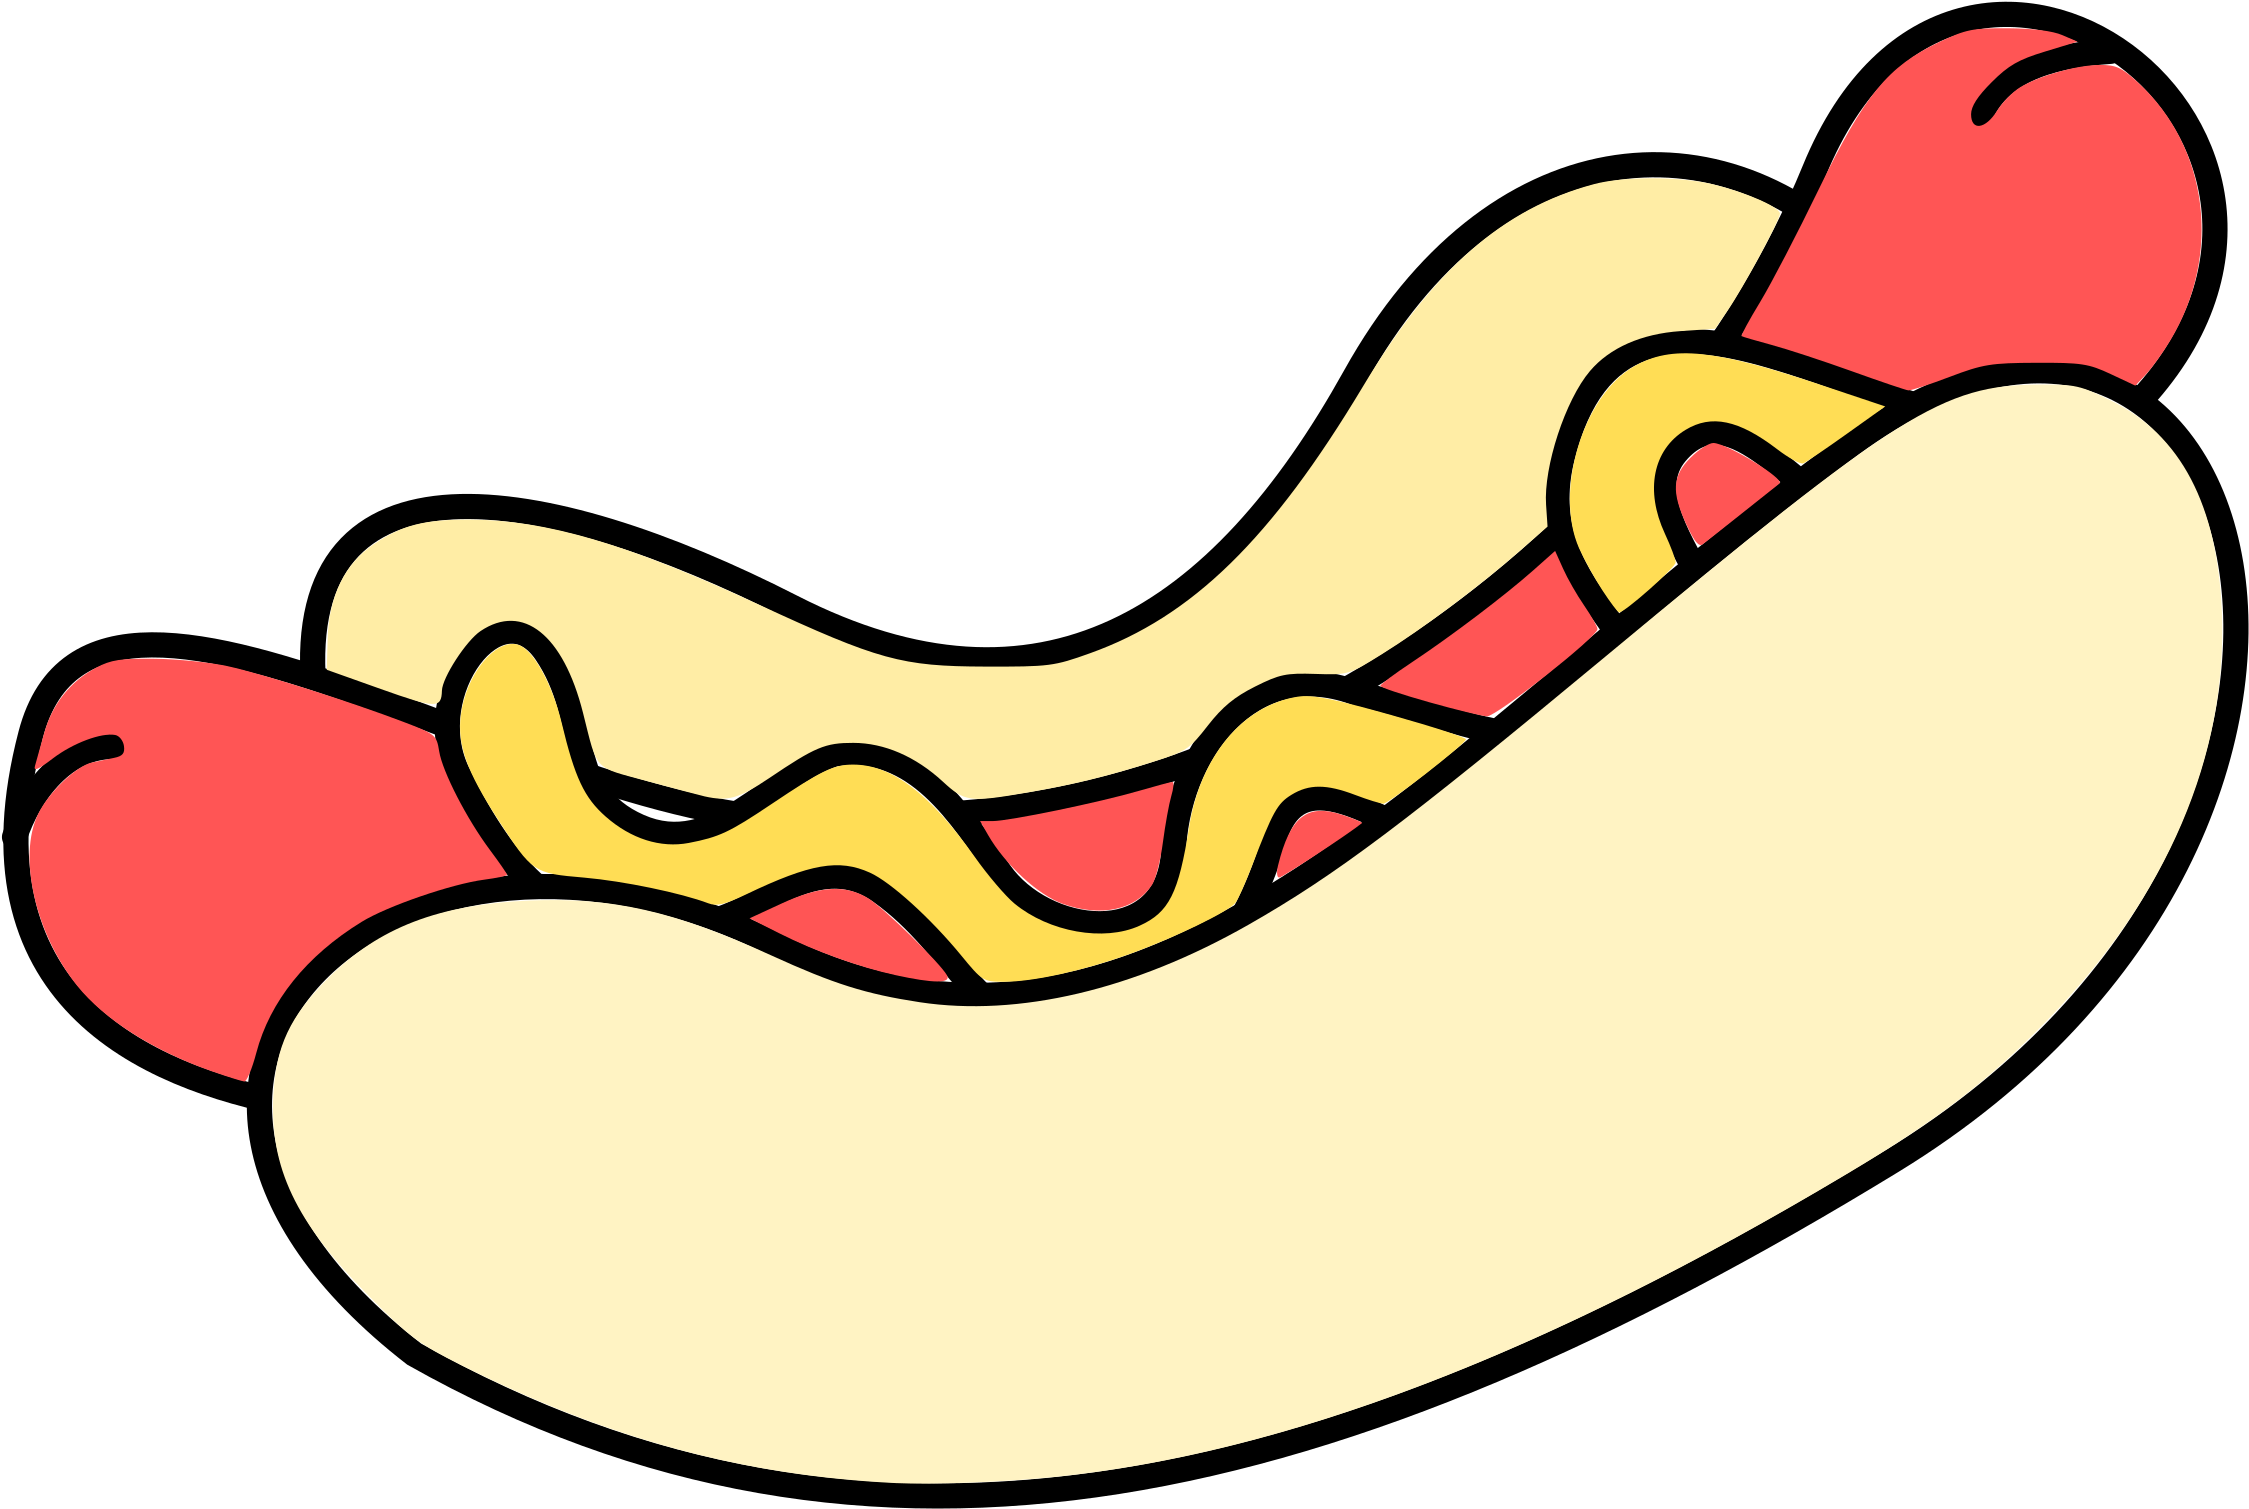 Free Stock Photos - Hot Dog Clip Art (2400x1652)